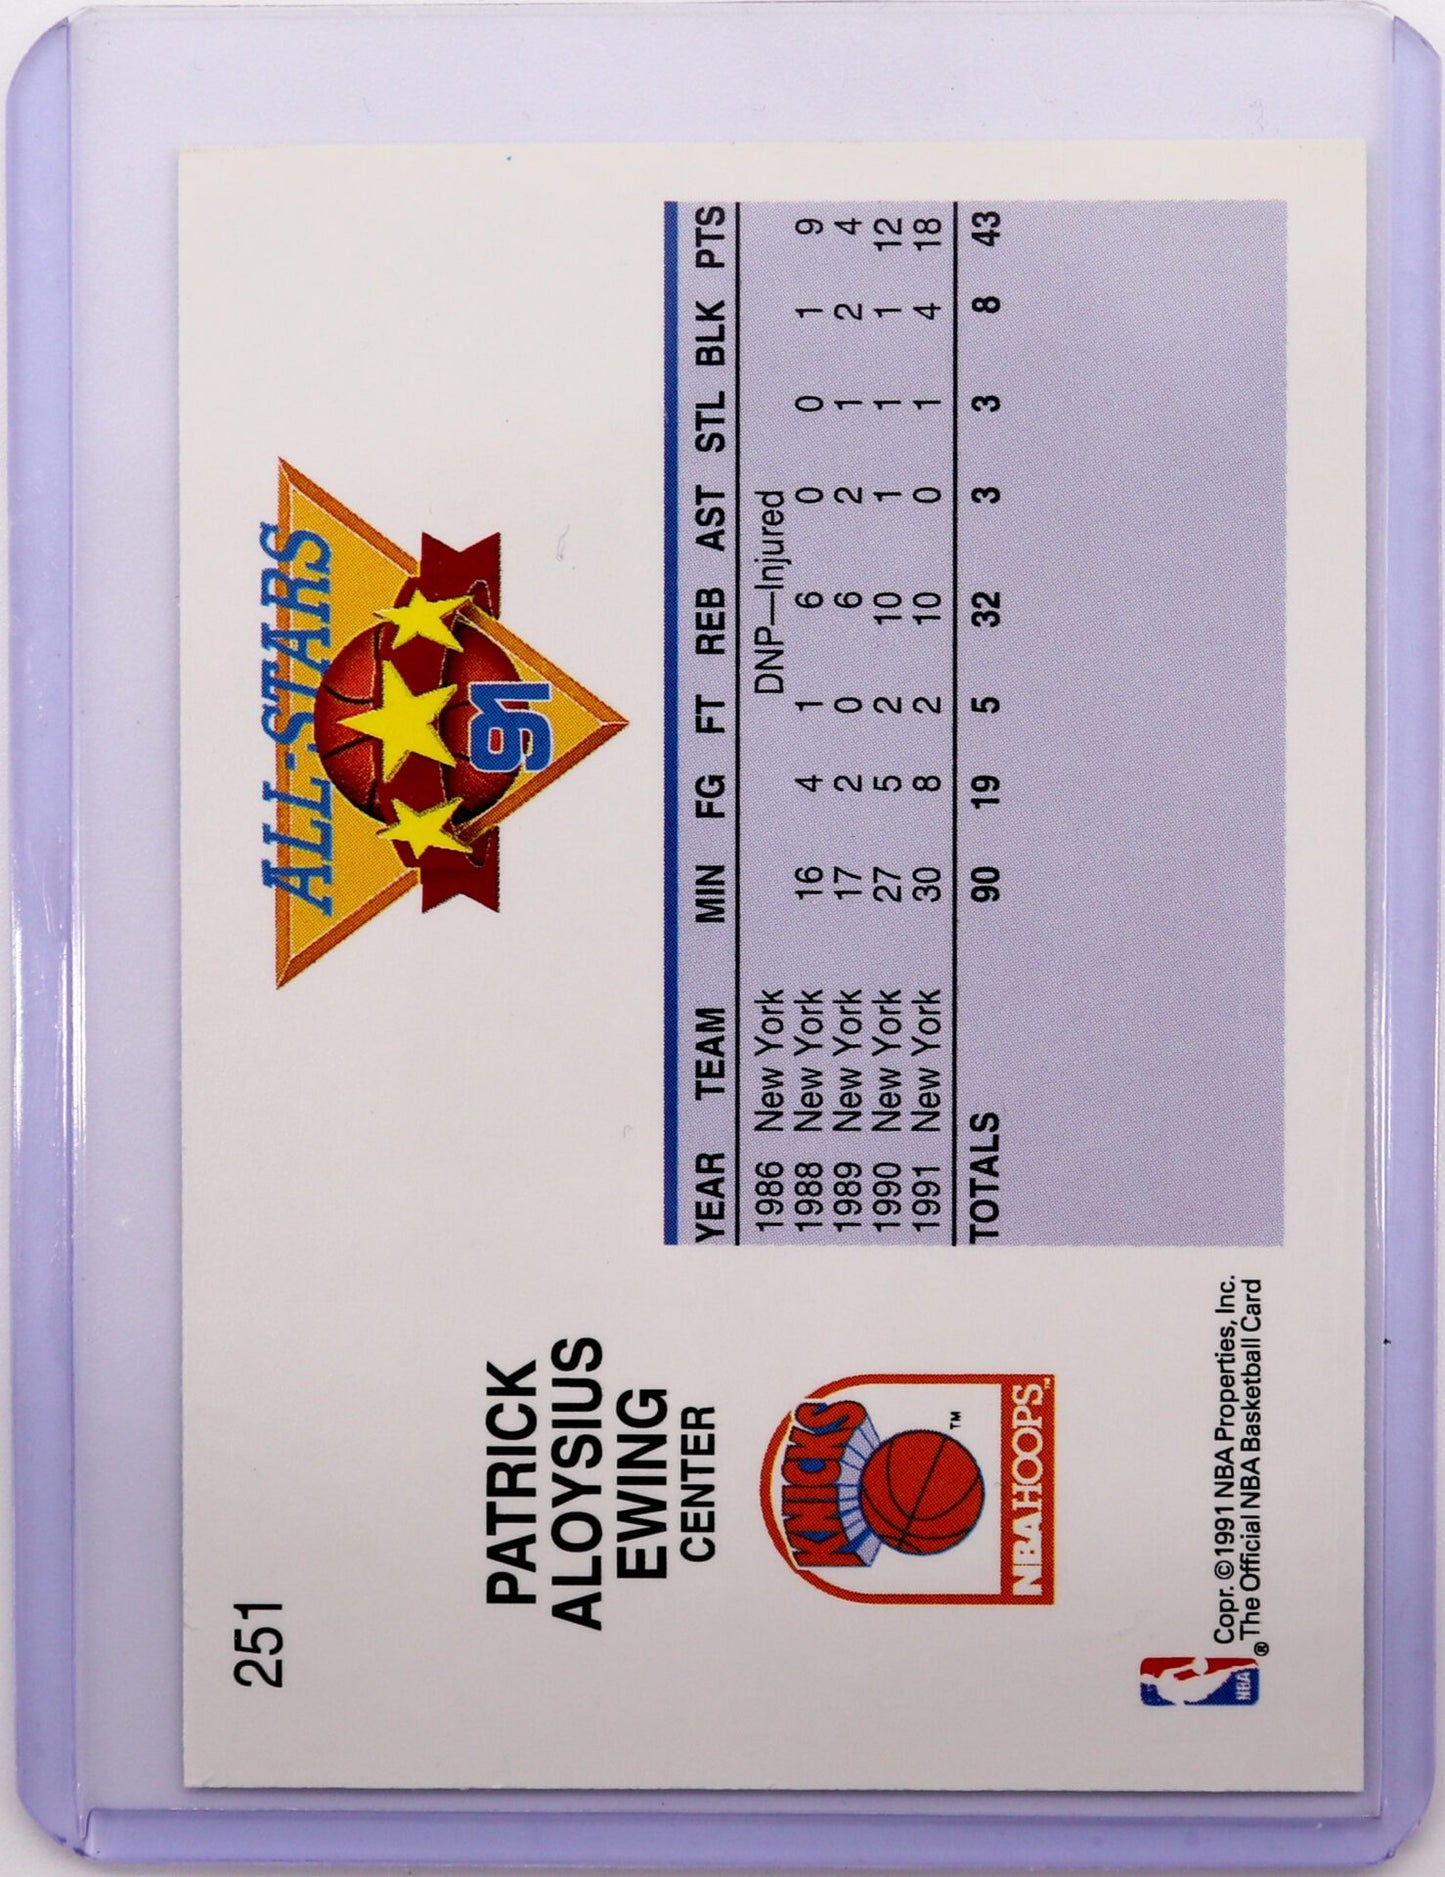 Patrick Ewing 1992 NBA Hoops All-Star Card, Mint